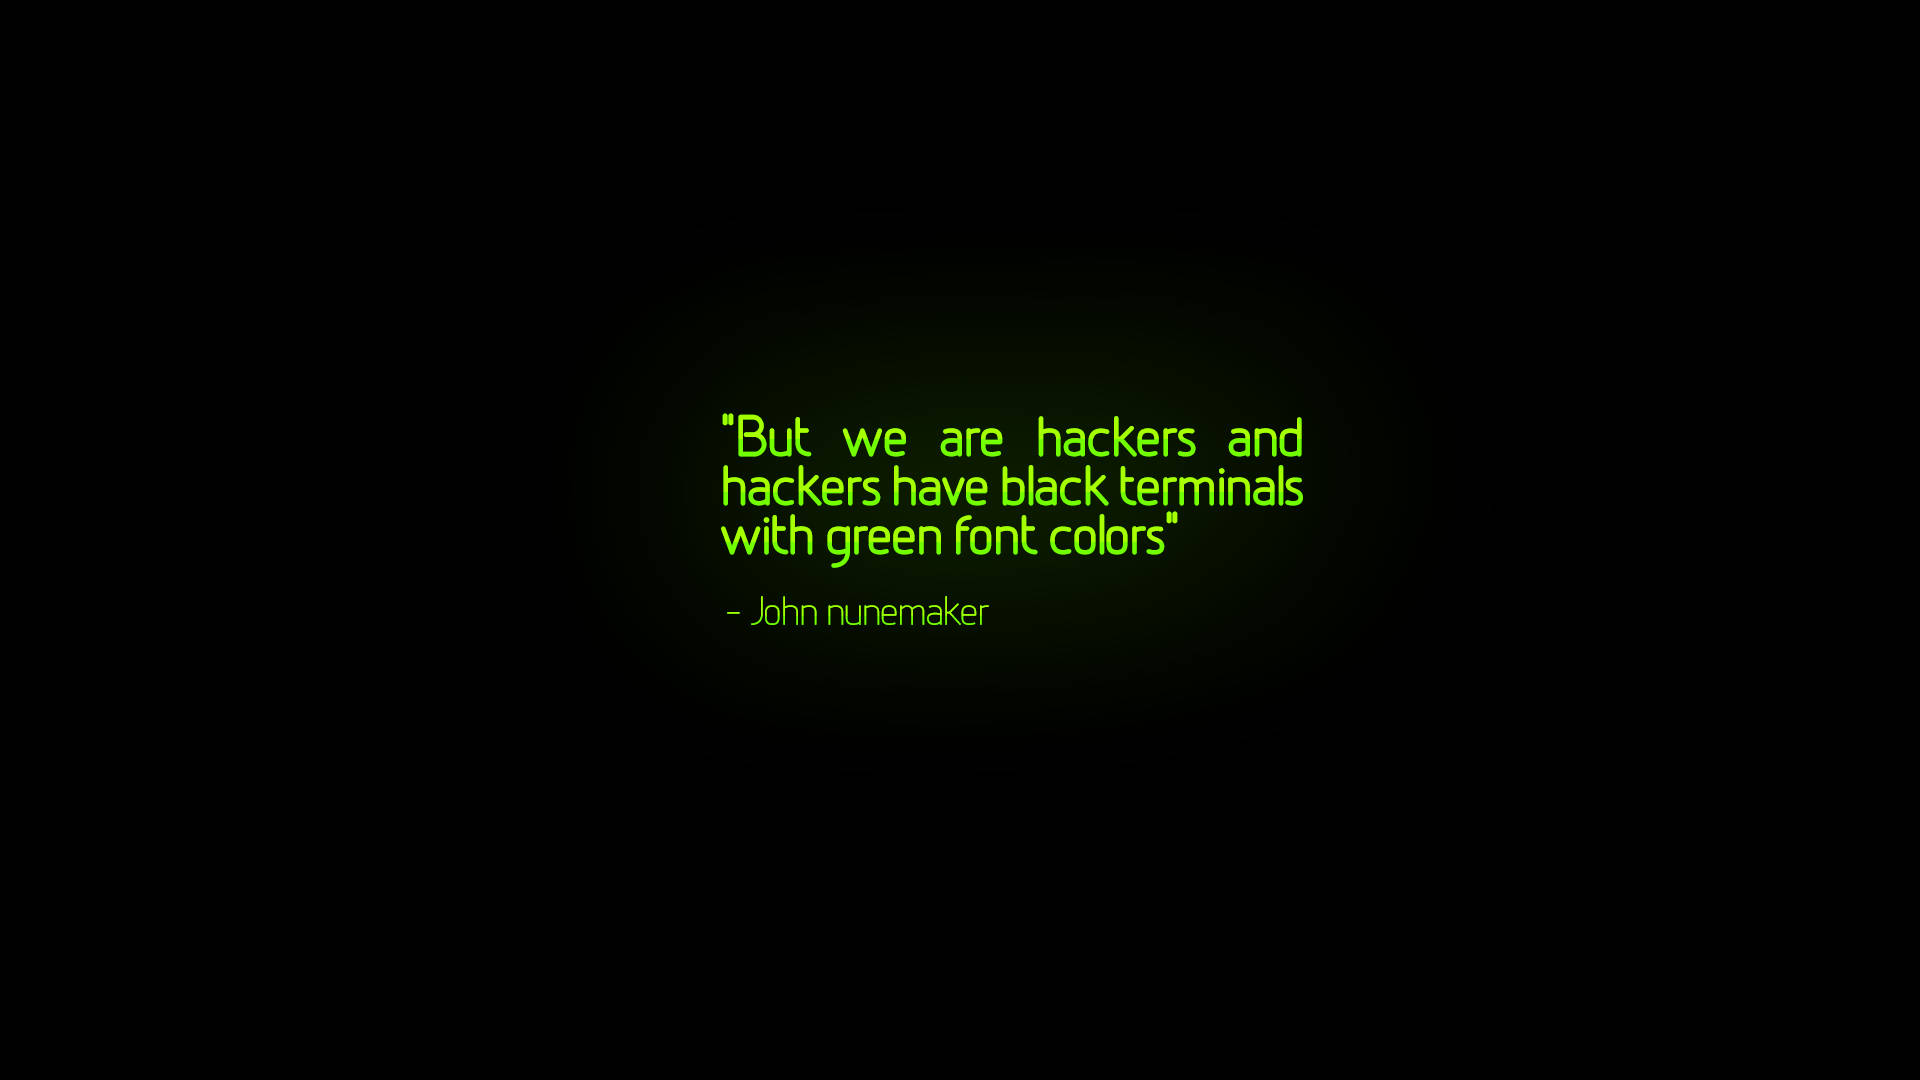 Hacker Green Font Full Hd Wallpaper